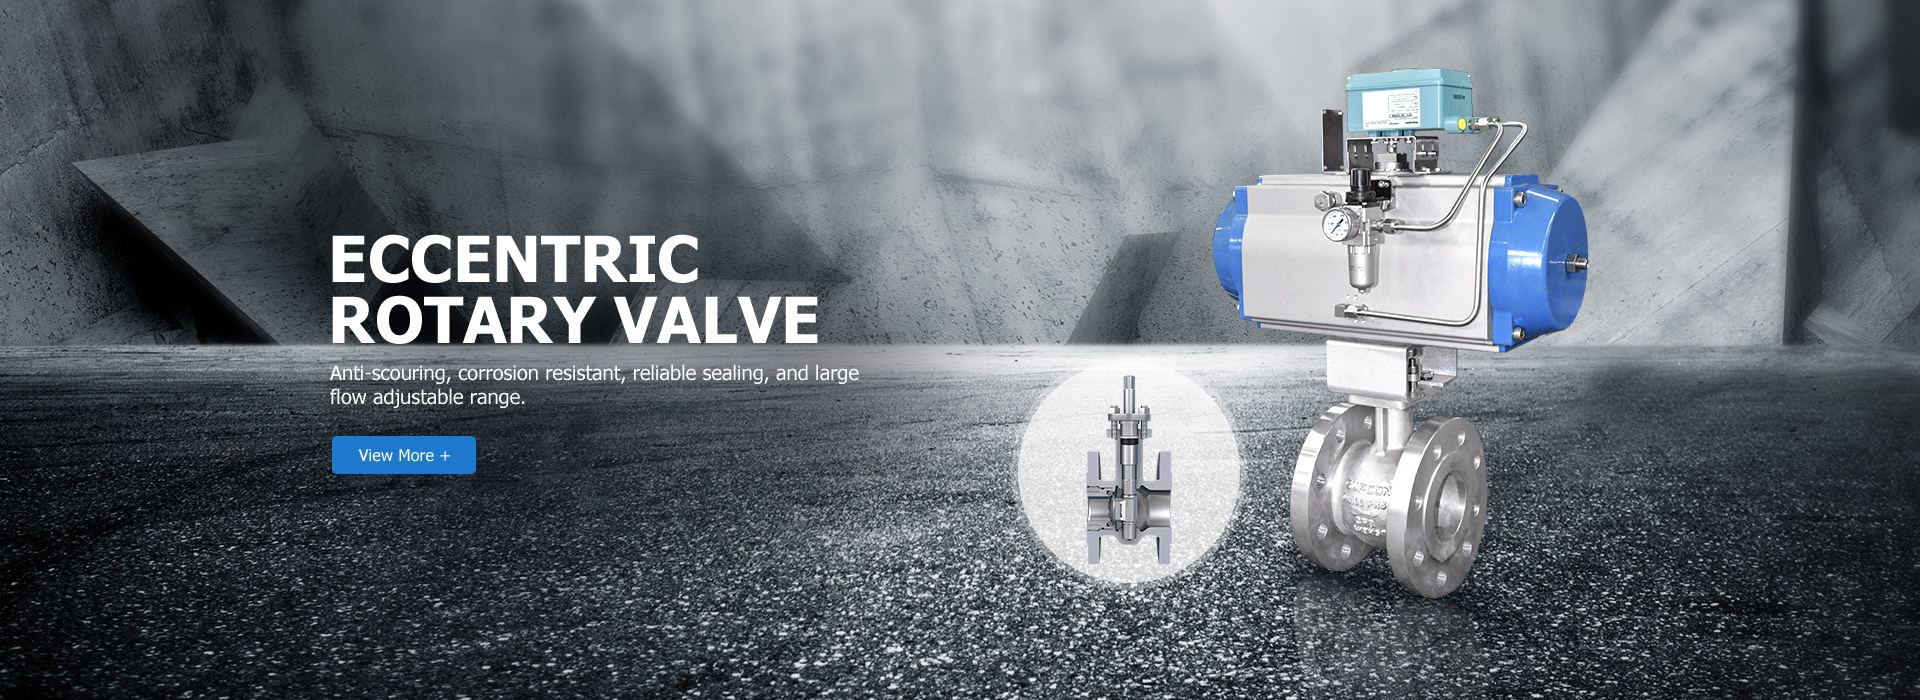 Eccentric rotary valve